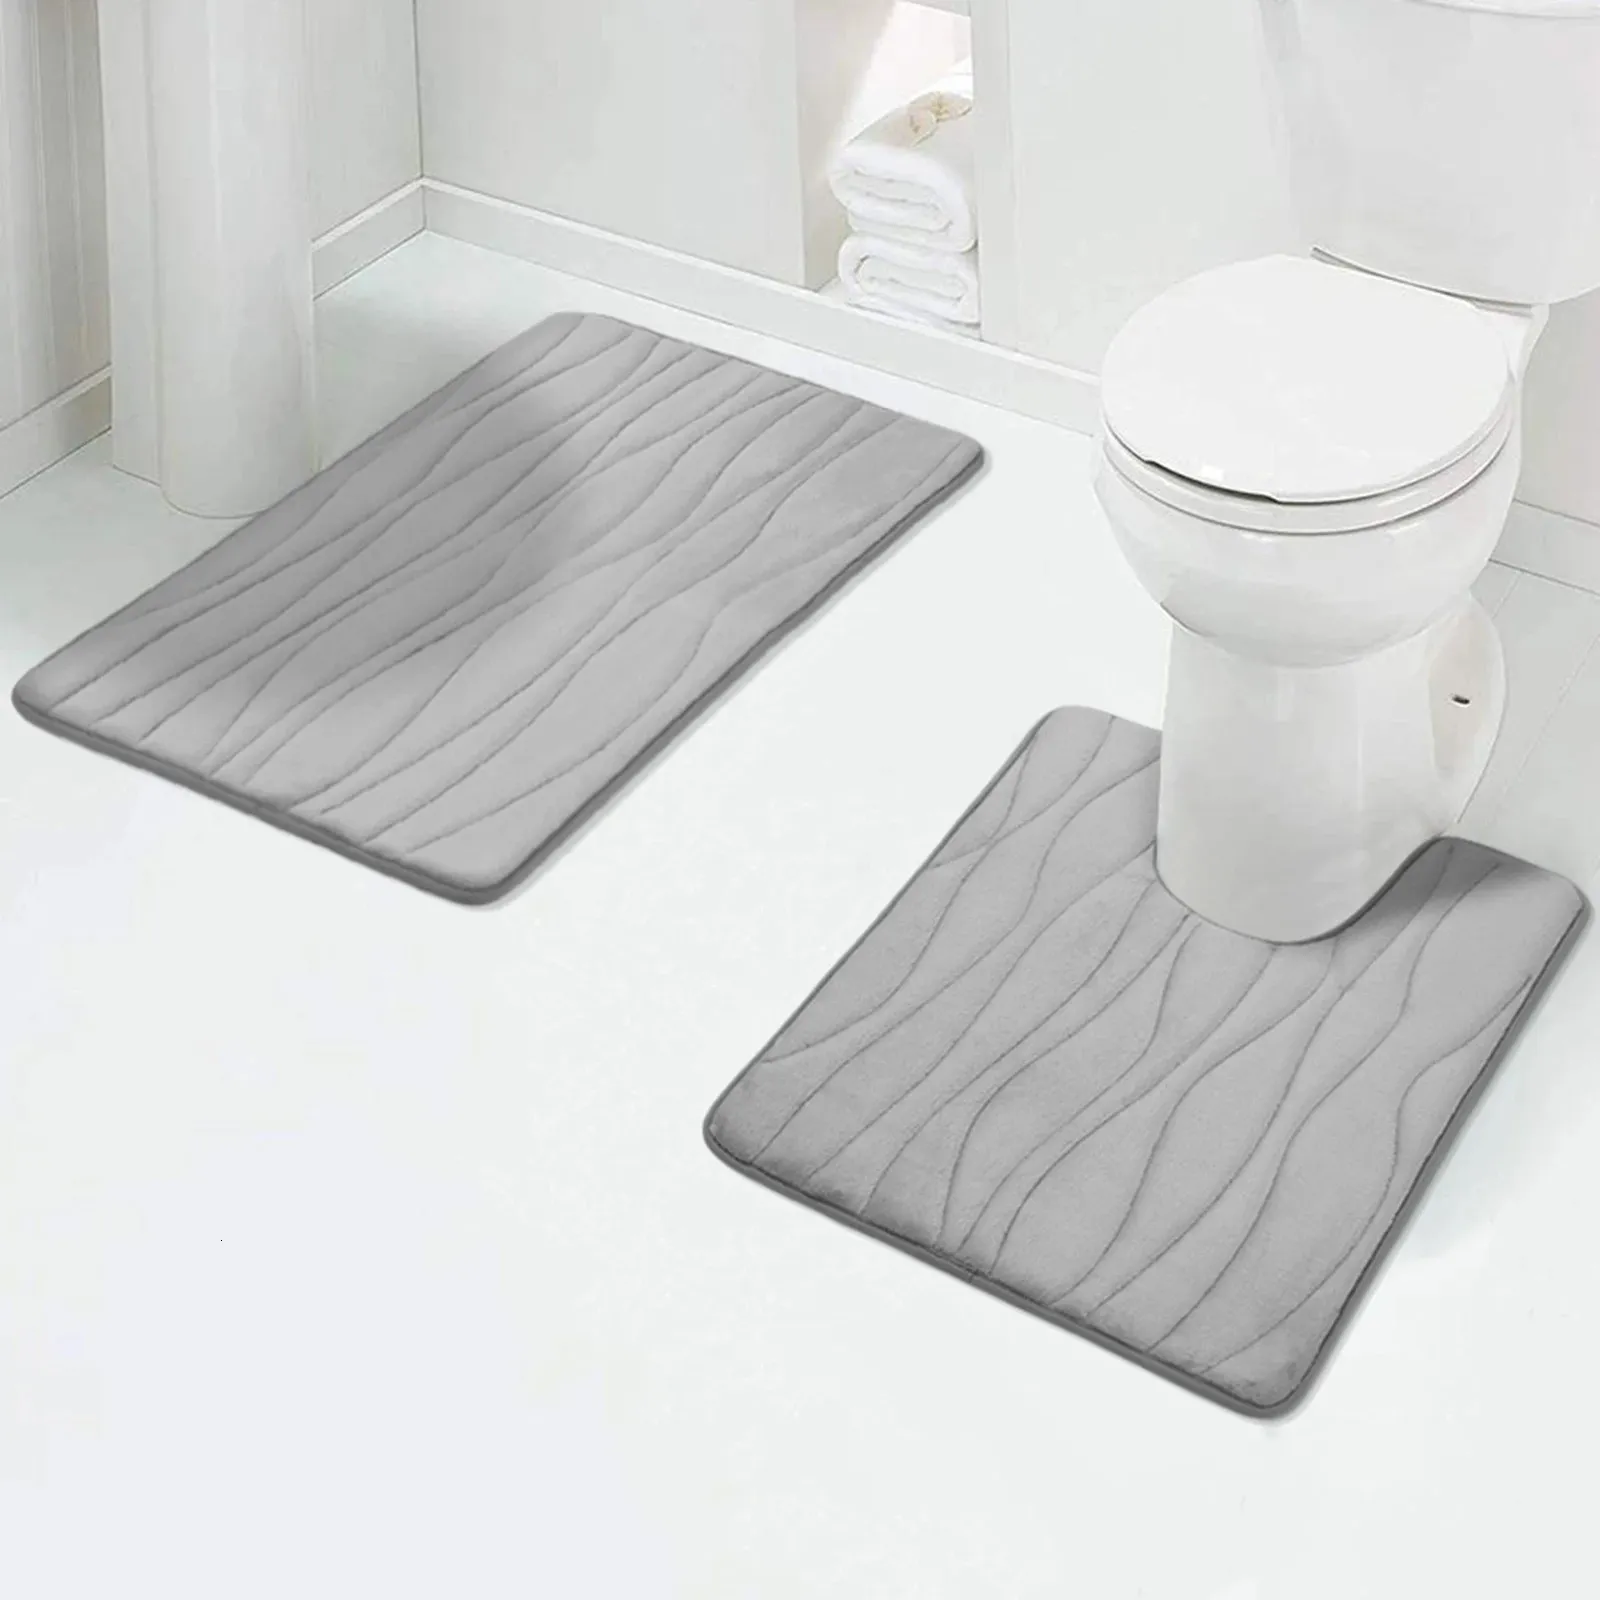 Carpet Olanly 2PCS Bathroom Rug Set Non-Slip Absorbent Shower Pad Soft Memory Foam Toilet Mat U Shaped Carpet Rectangle Floor Bath Mat 231215